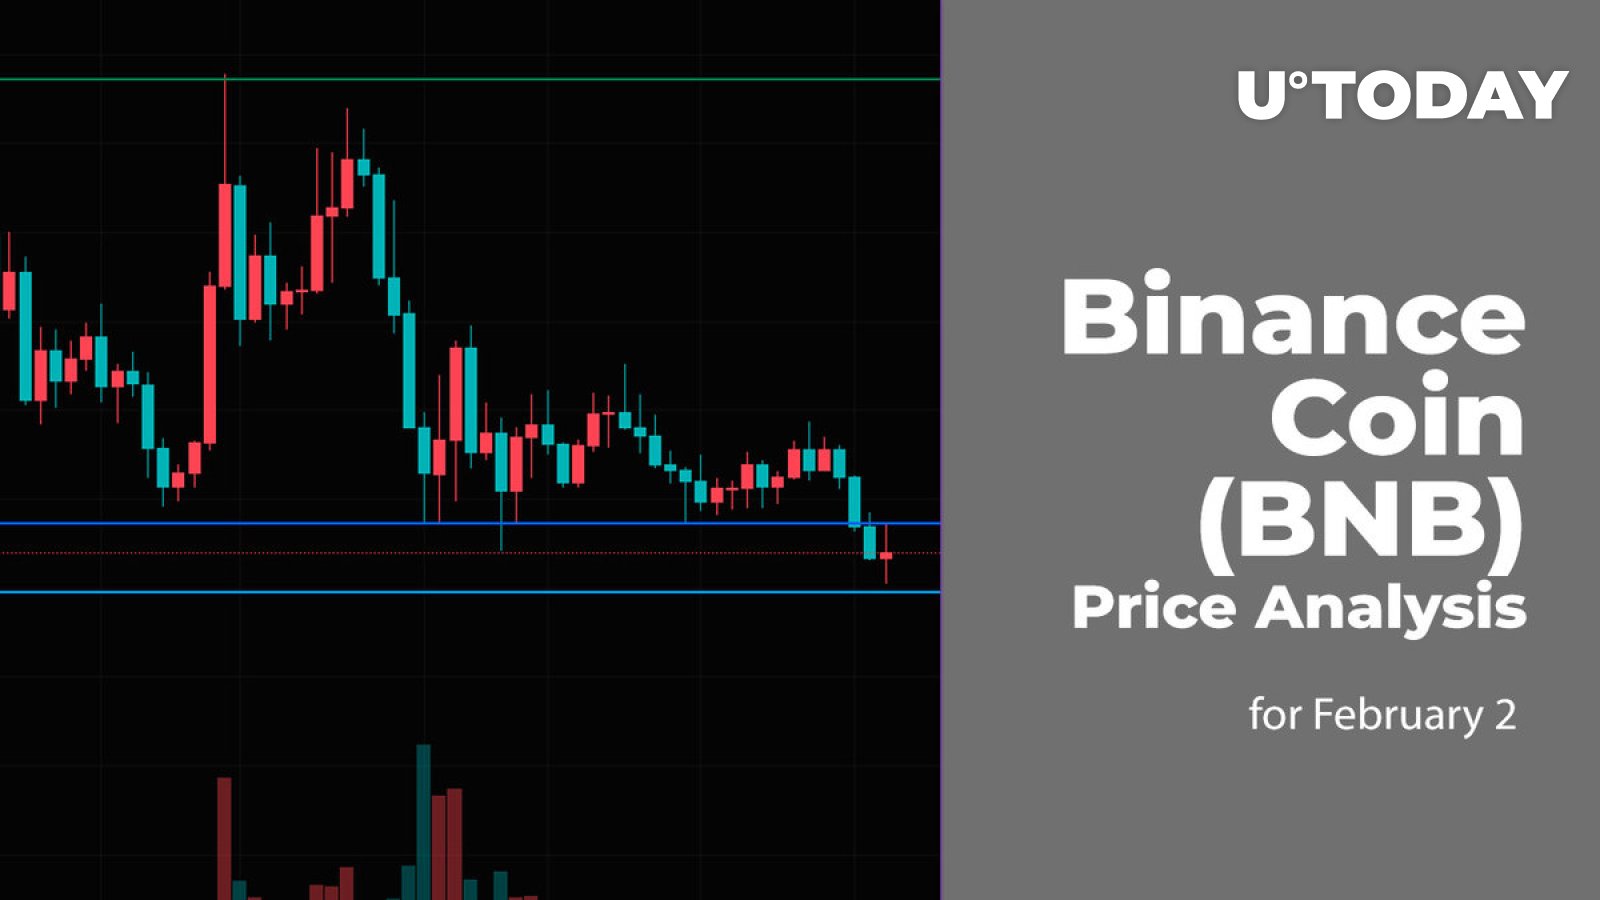 Binance Coin (BNB) Price Analysis for February 2